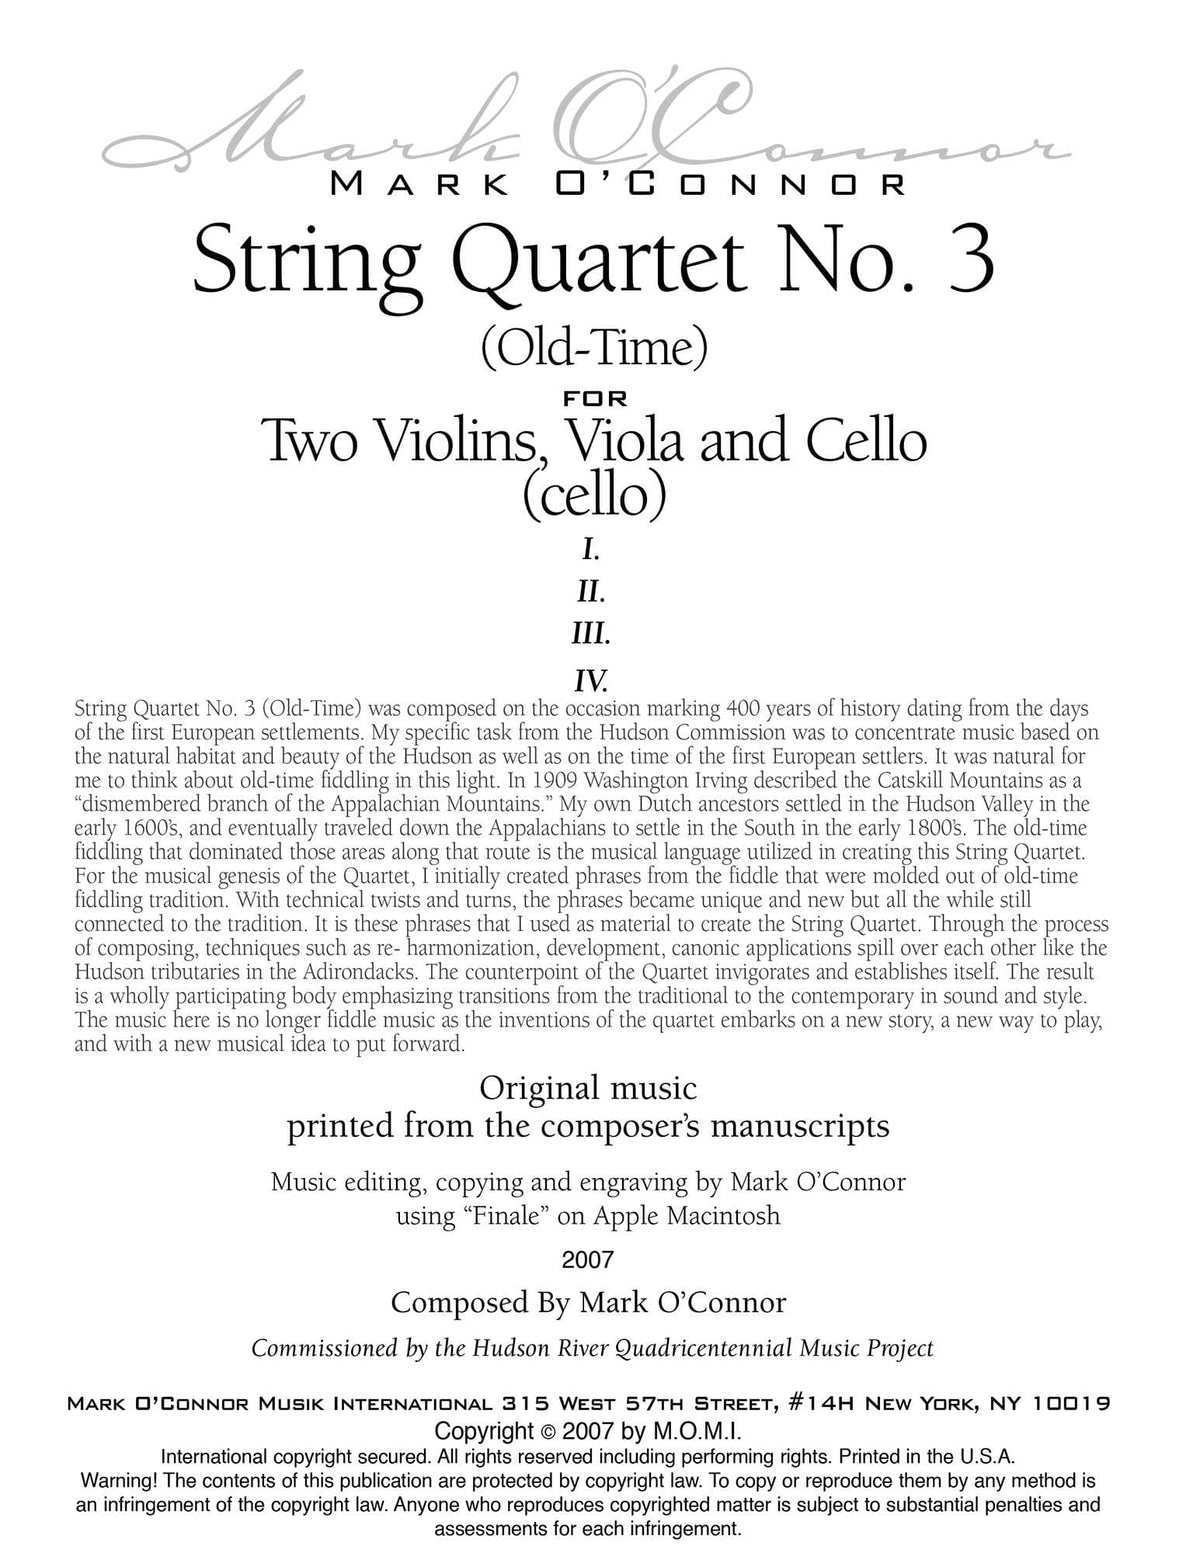 O'Connor, Mark - String Quartet No. 3 (Old-Time) for 2 Violins, Viola, and Cello - Cello - Digital Download